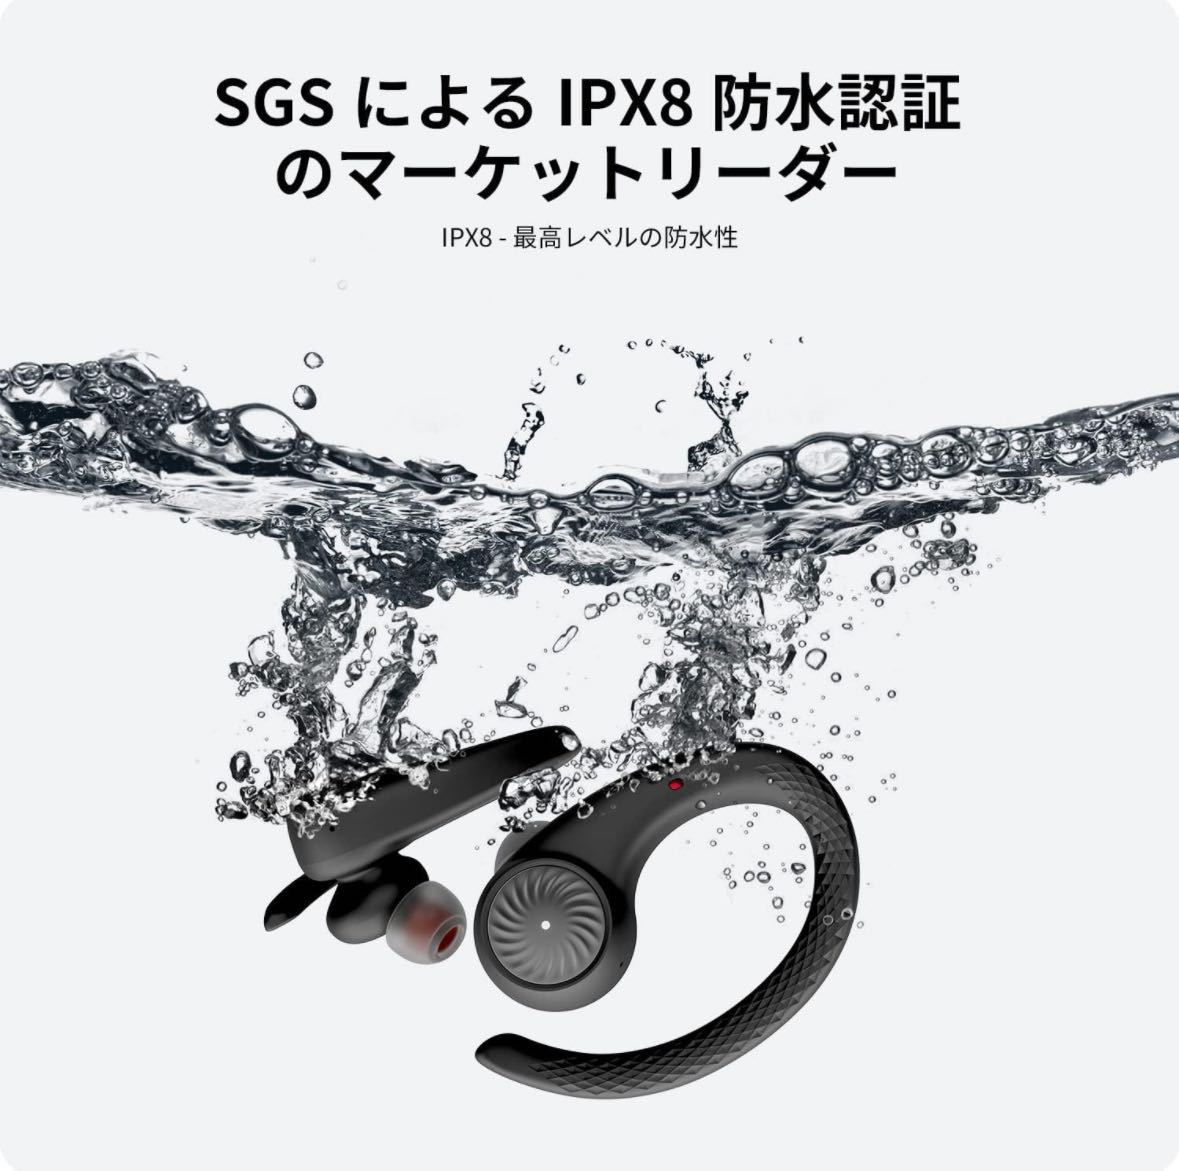 Tribit 耳掛け式 イヤホン Bluetooth5.2 外音取り込み機能 SGS認証 IPX8防水 15時間連続再生 専用アプリ対応 ランニング スポーツ _画像2